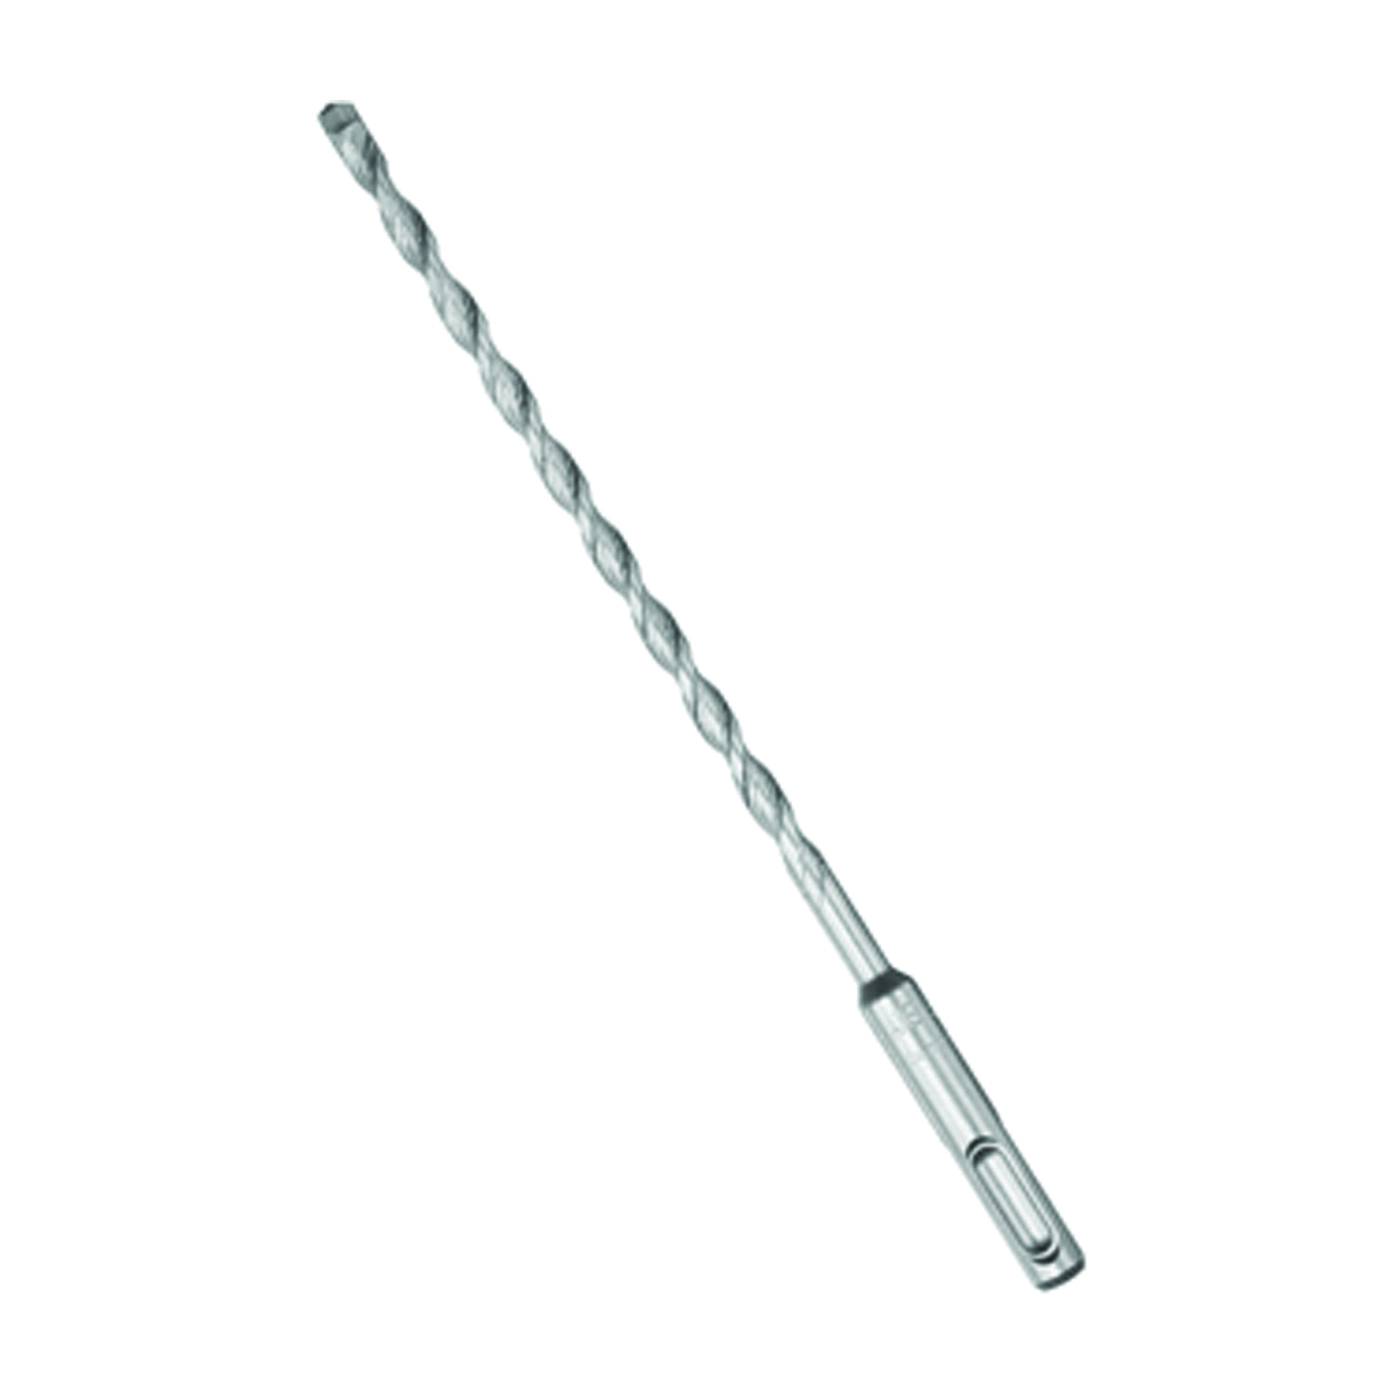 Bulldog HCFC2102 Rotary Hammer Drill Bit, 5/8 in Dia, 8-1/2 in OAL, Optimized Flute, 25/64 in Dia Shank